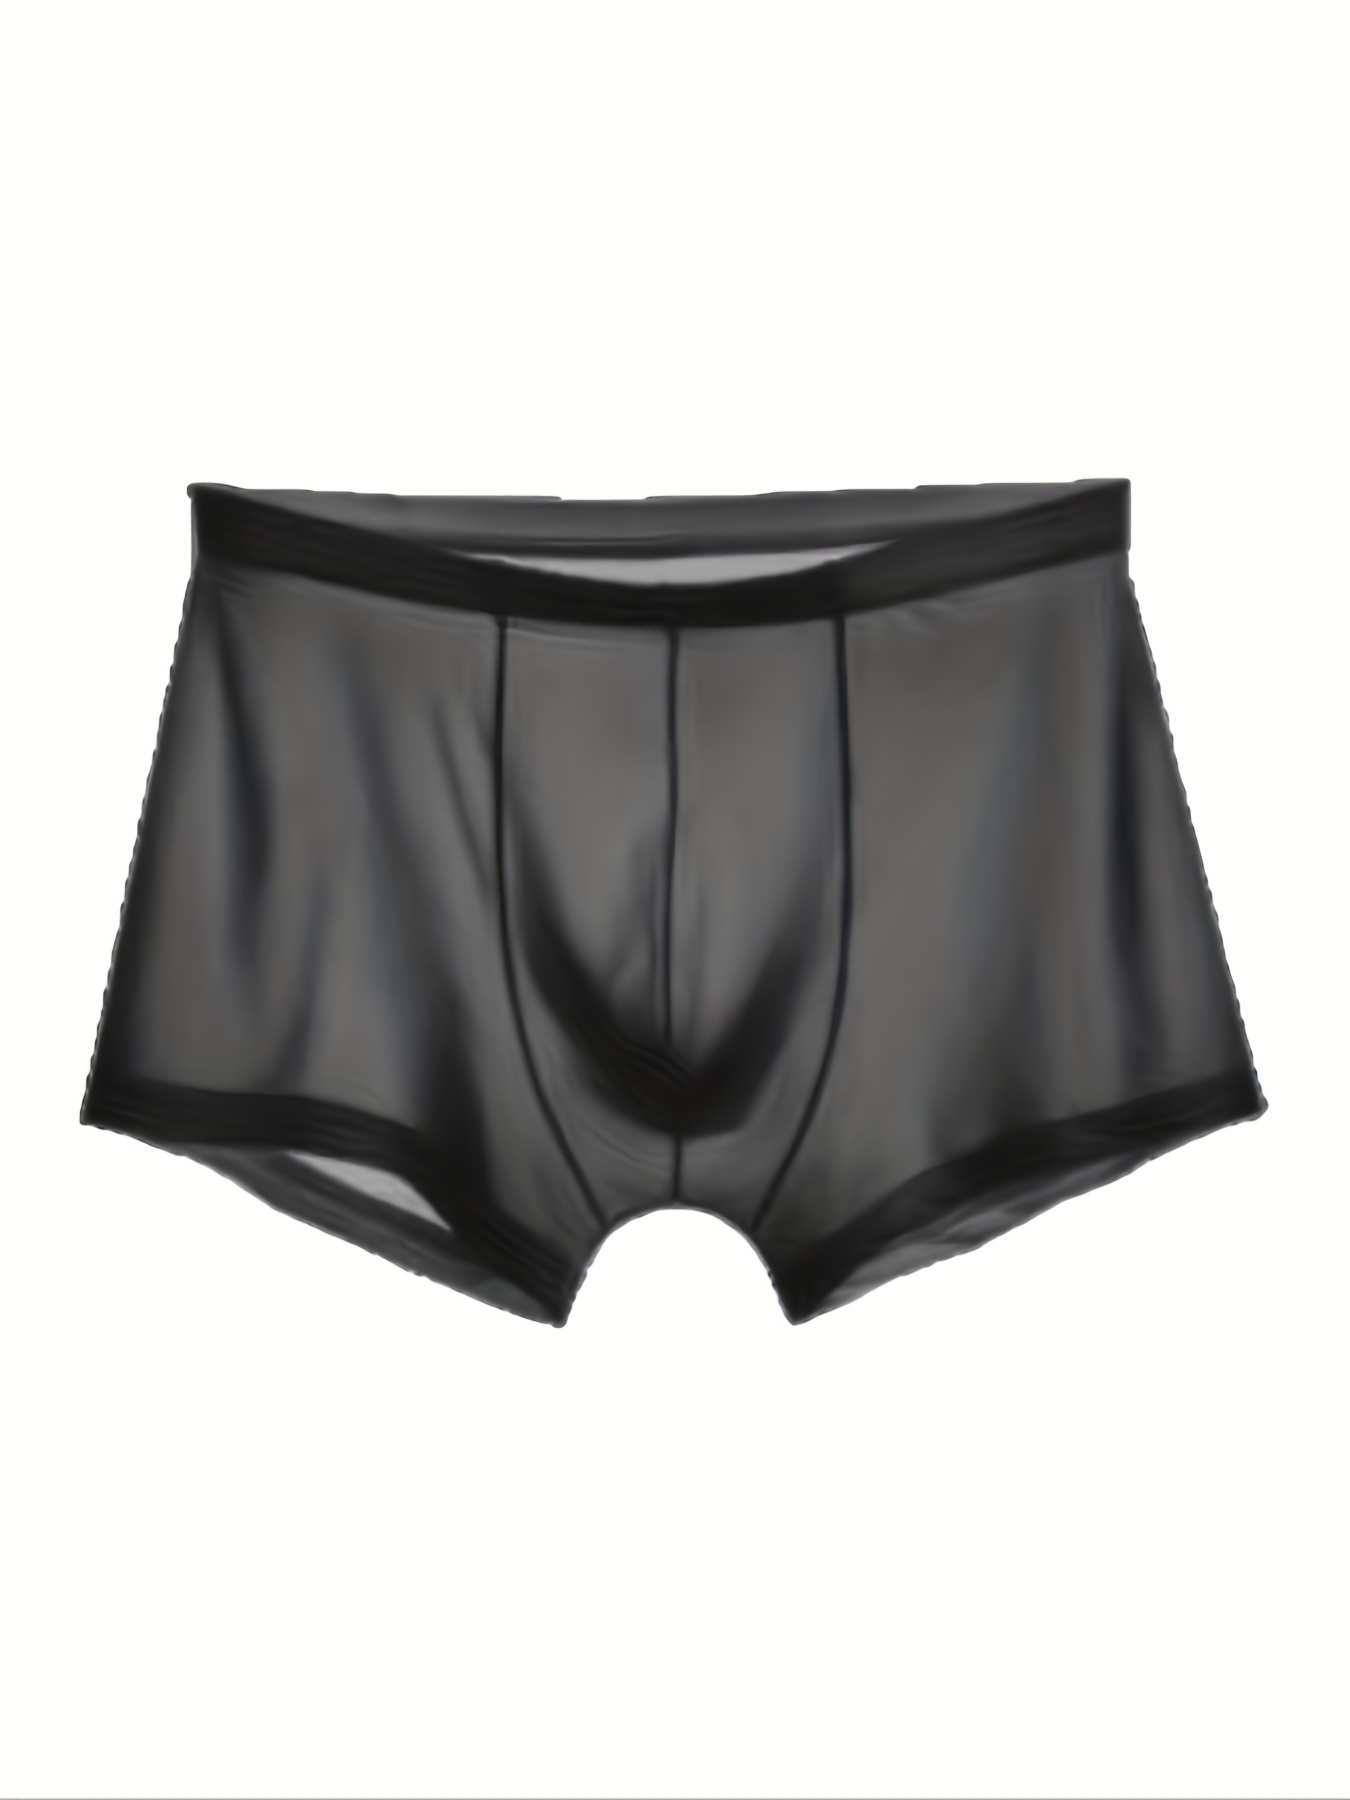 Men's Trunks Underwear Seamless Boxer Briefs Elastic Soft Thin Underpants  Solid